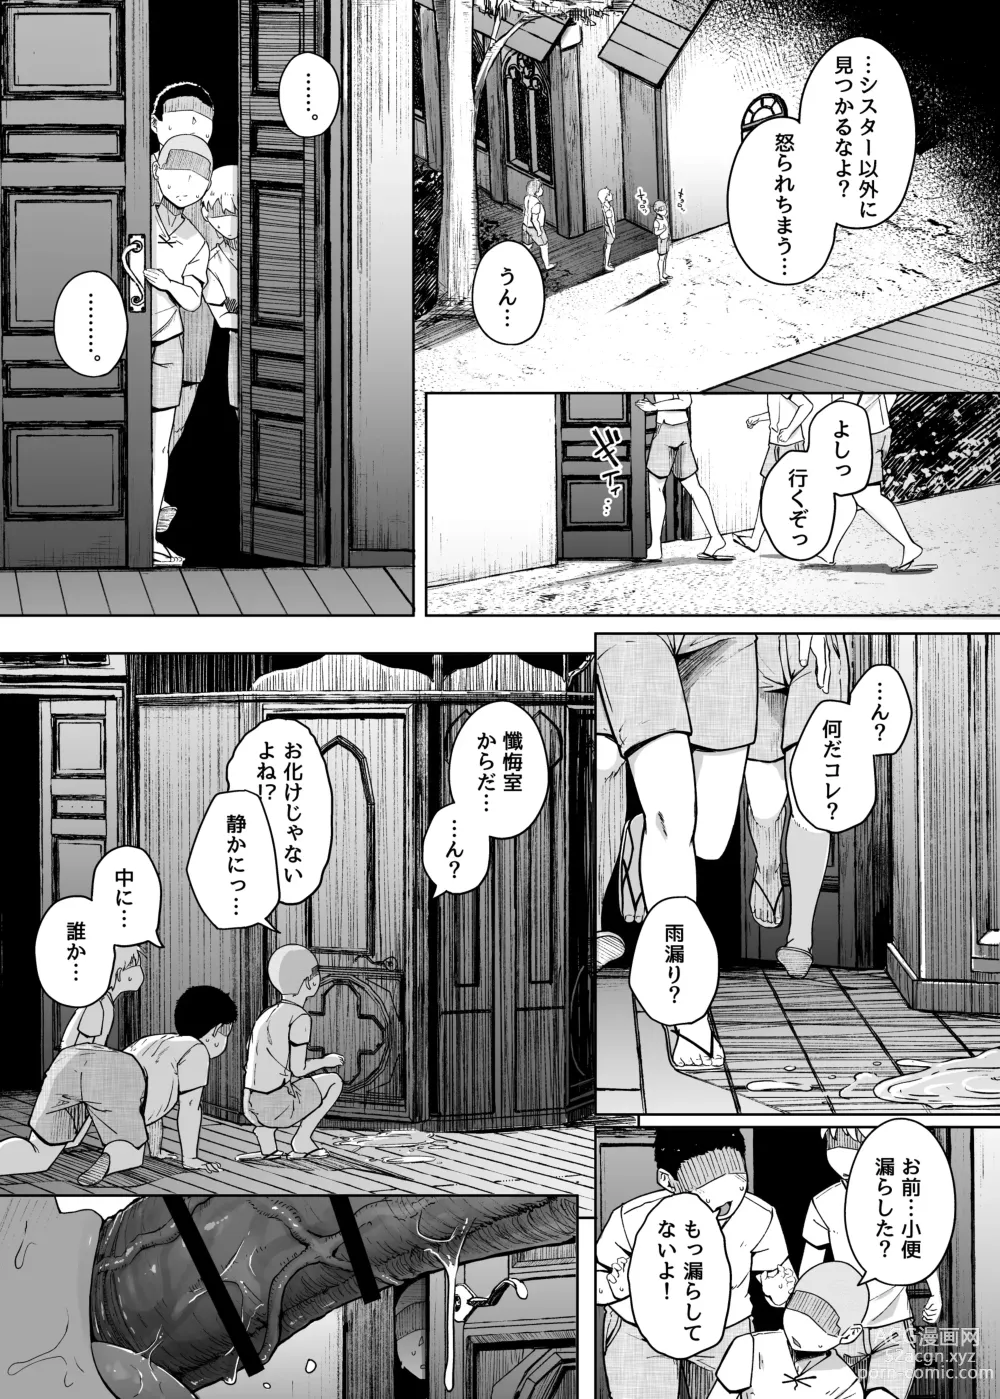 Page 9 of doujinshi Zange Ana 3